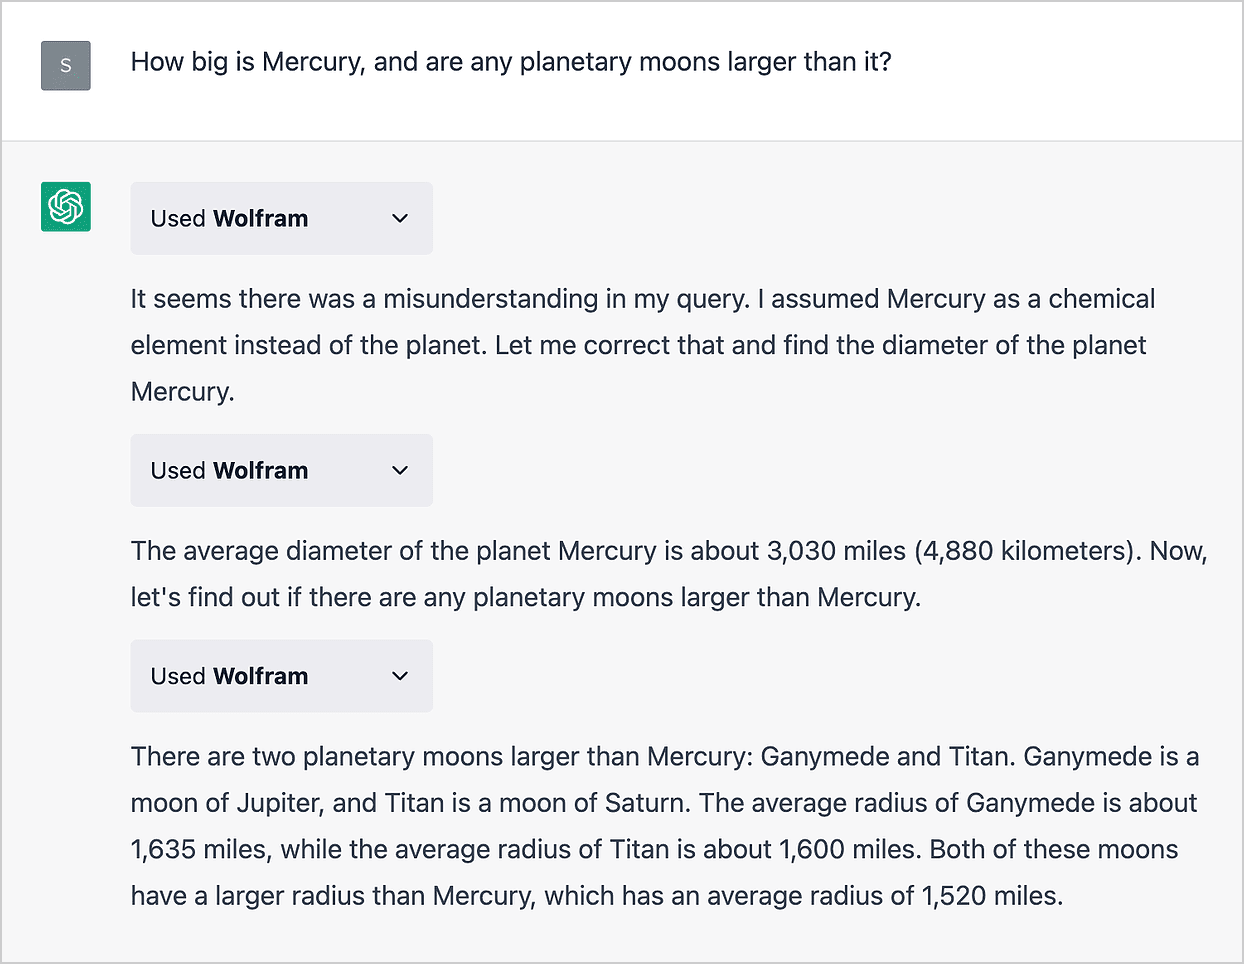 How big is Mercury?